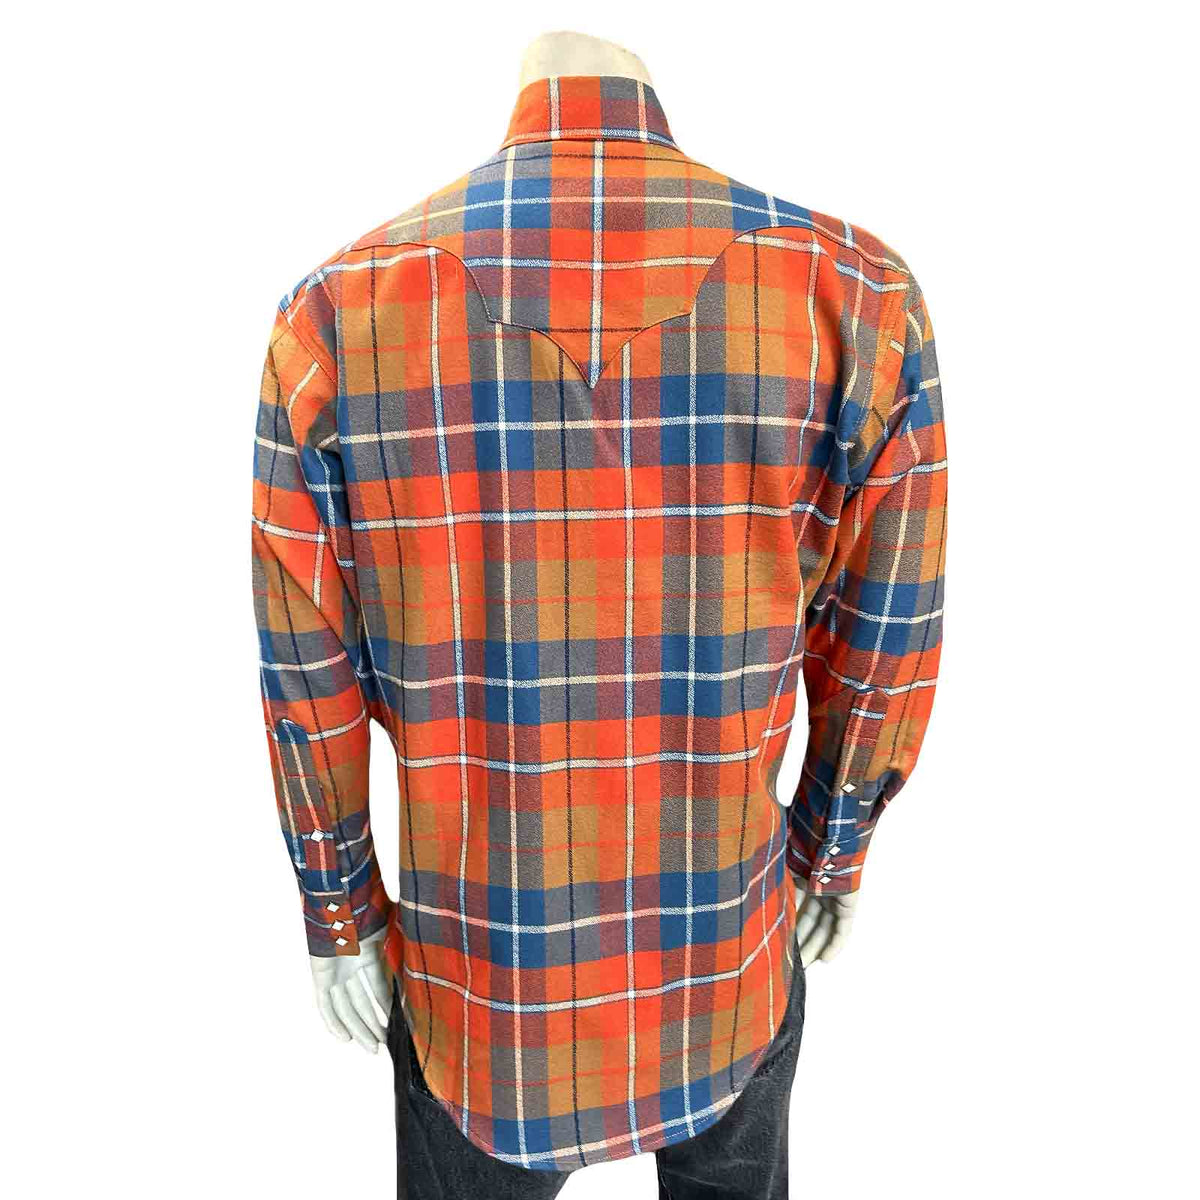 Men's Plush Flannel Orange & Blue Plaid Western Shirt